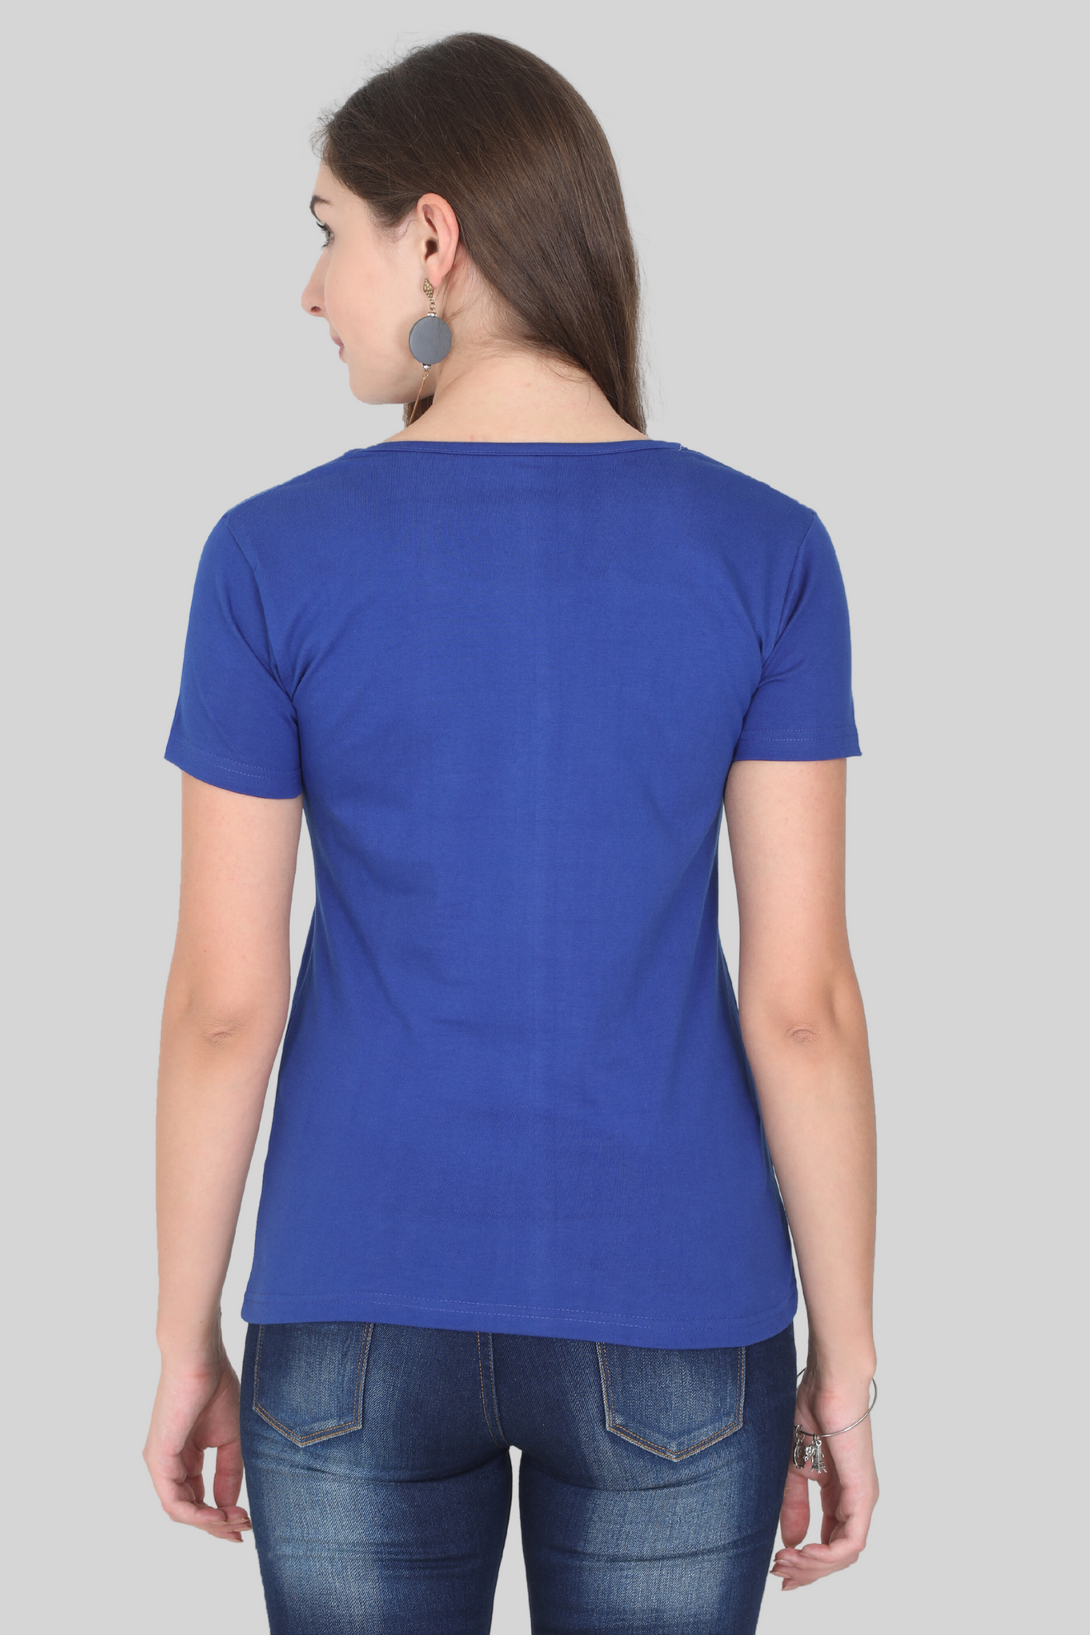 Royal Blue Scoop Neck T-Shirt For Women - WowWaves - 6